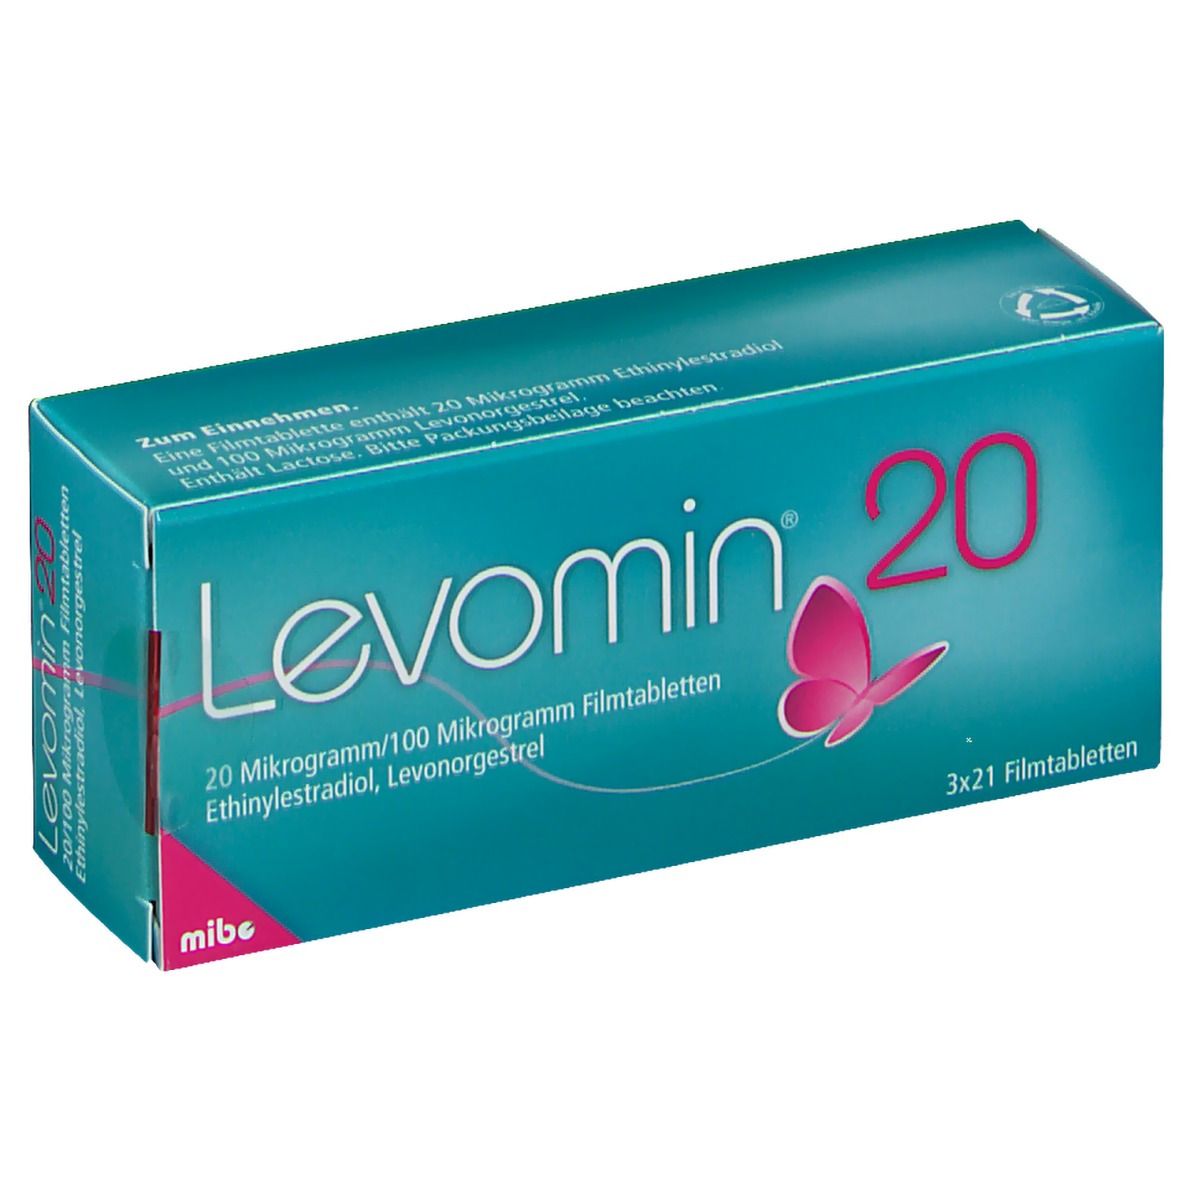 Levomin 20 20 µg/100 µg